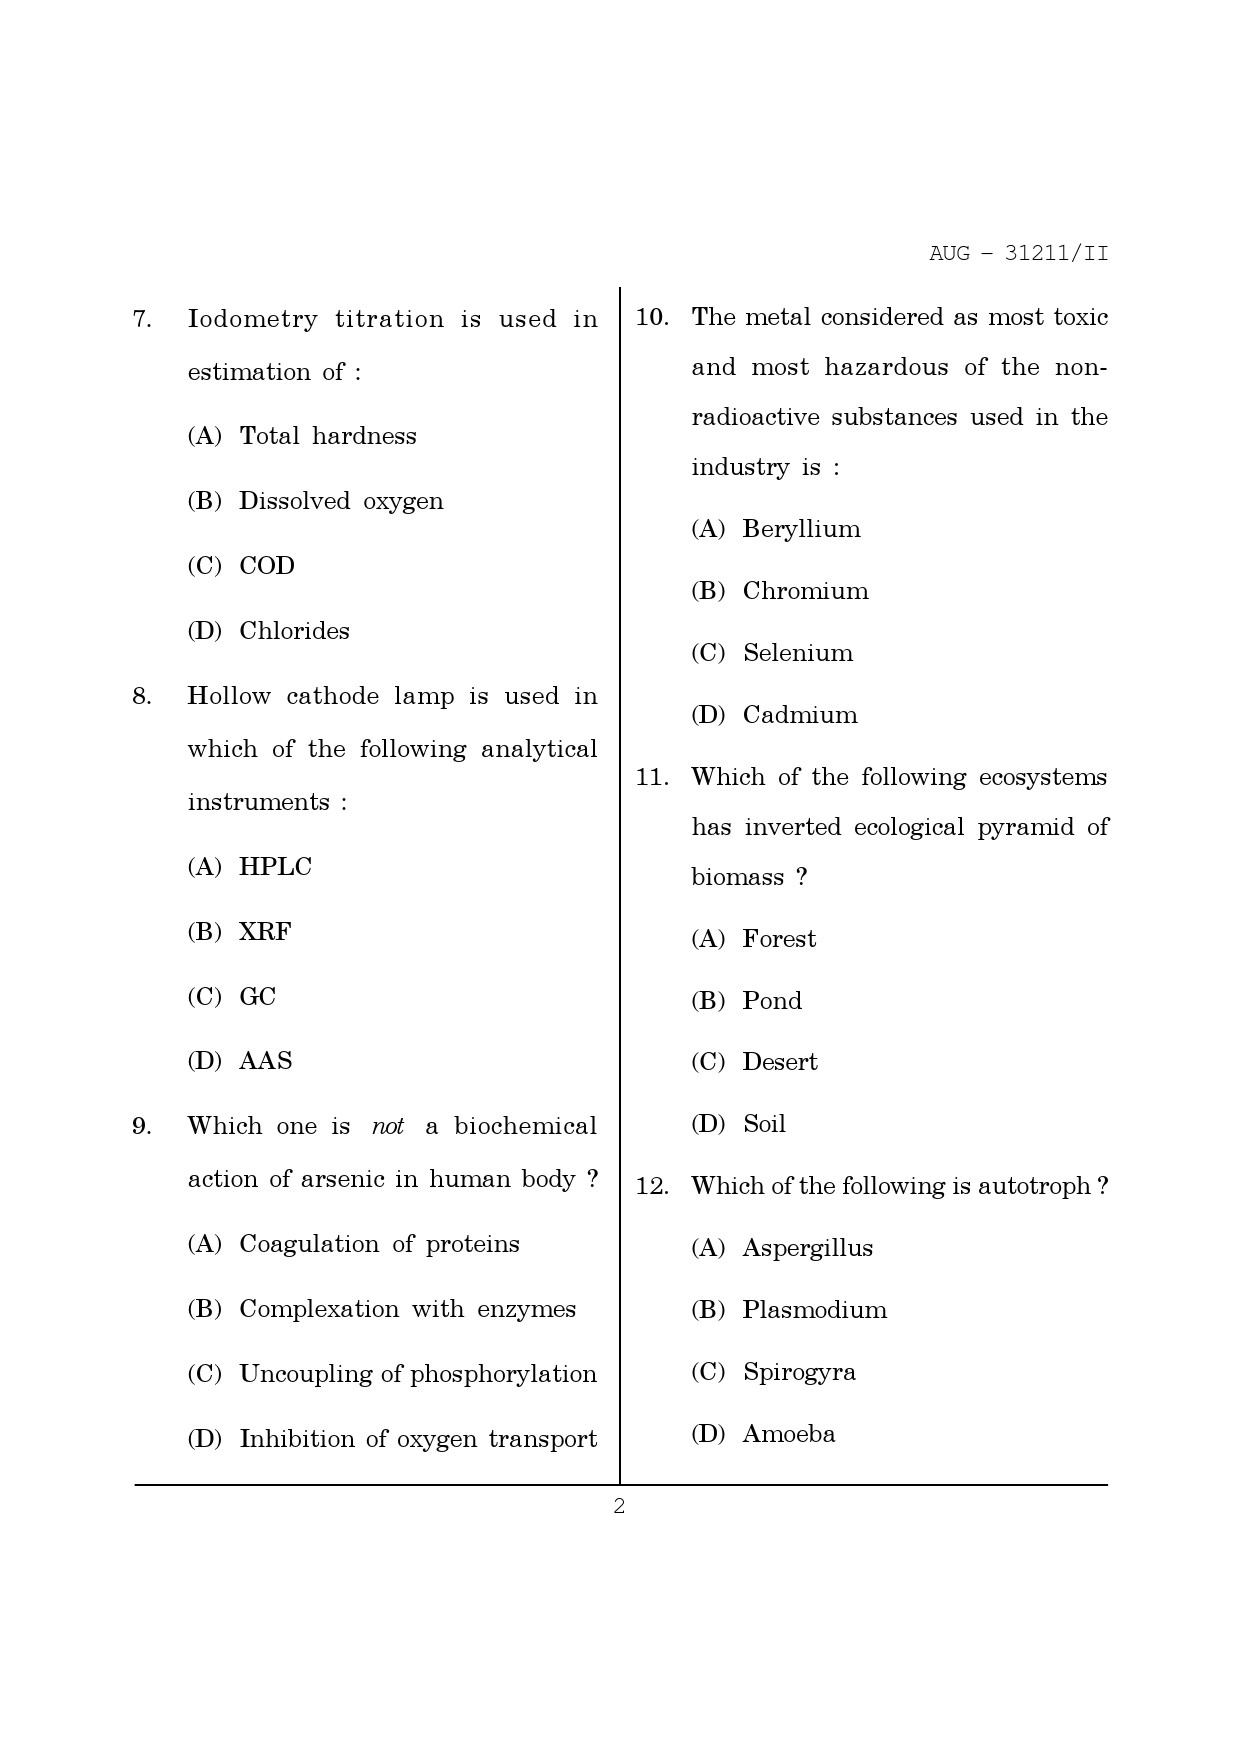 Maharashtra SET Environmental Sciences Question Paper II August 2011 2